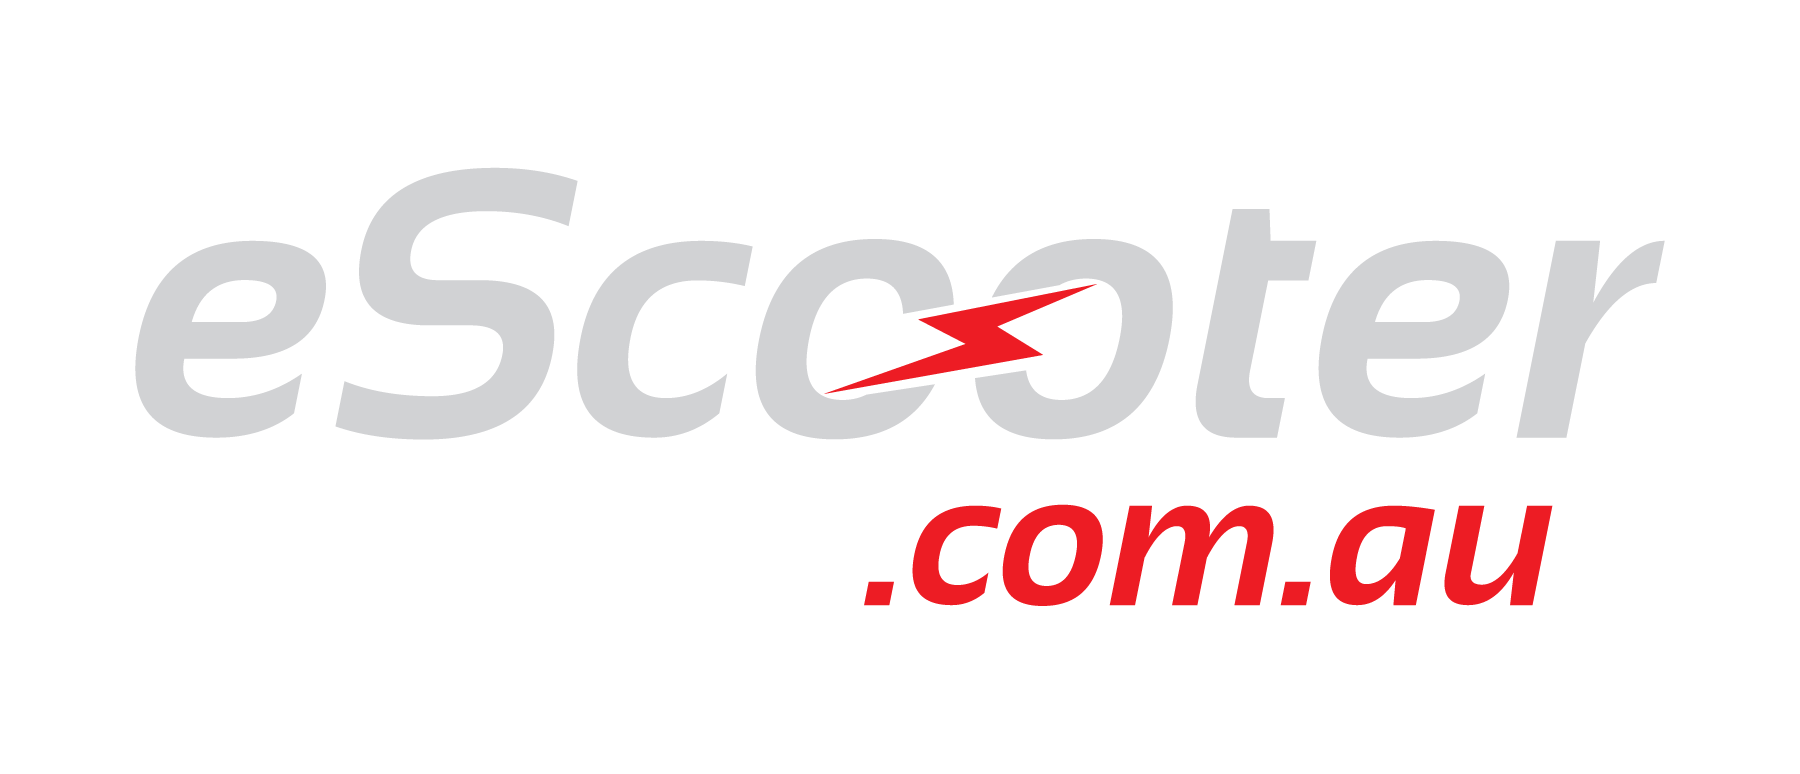 eScooter